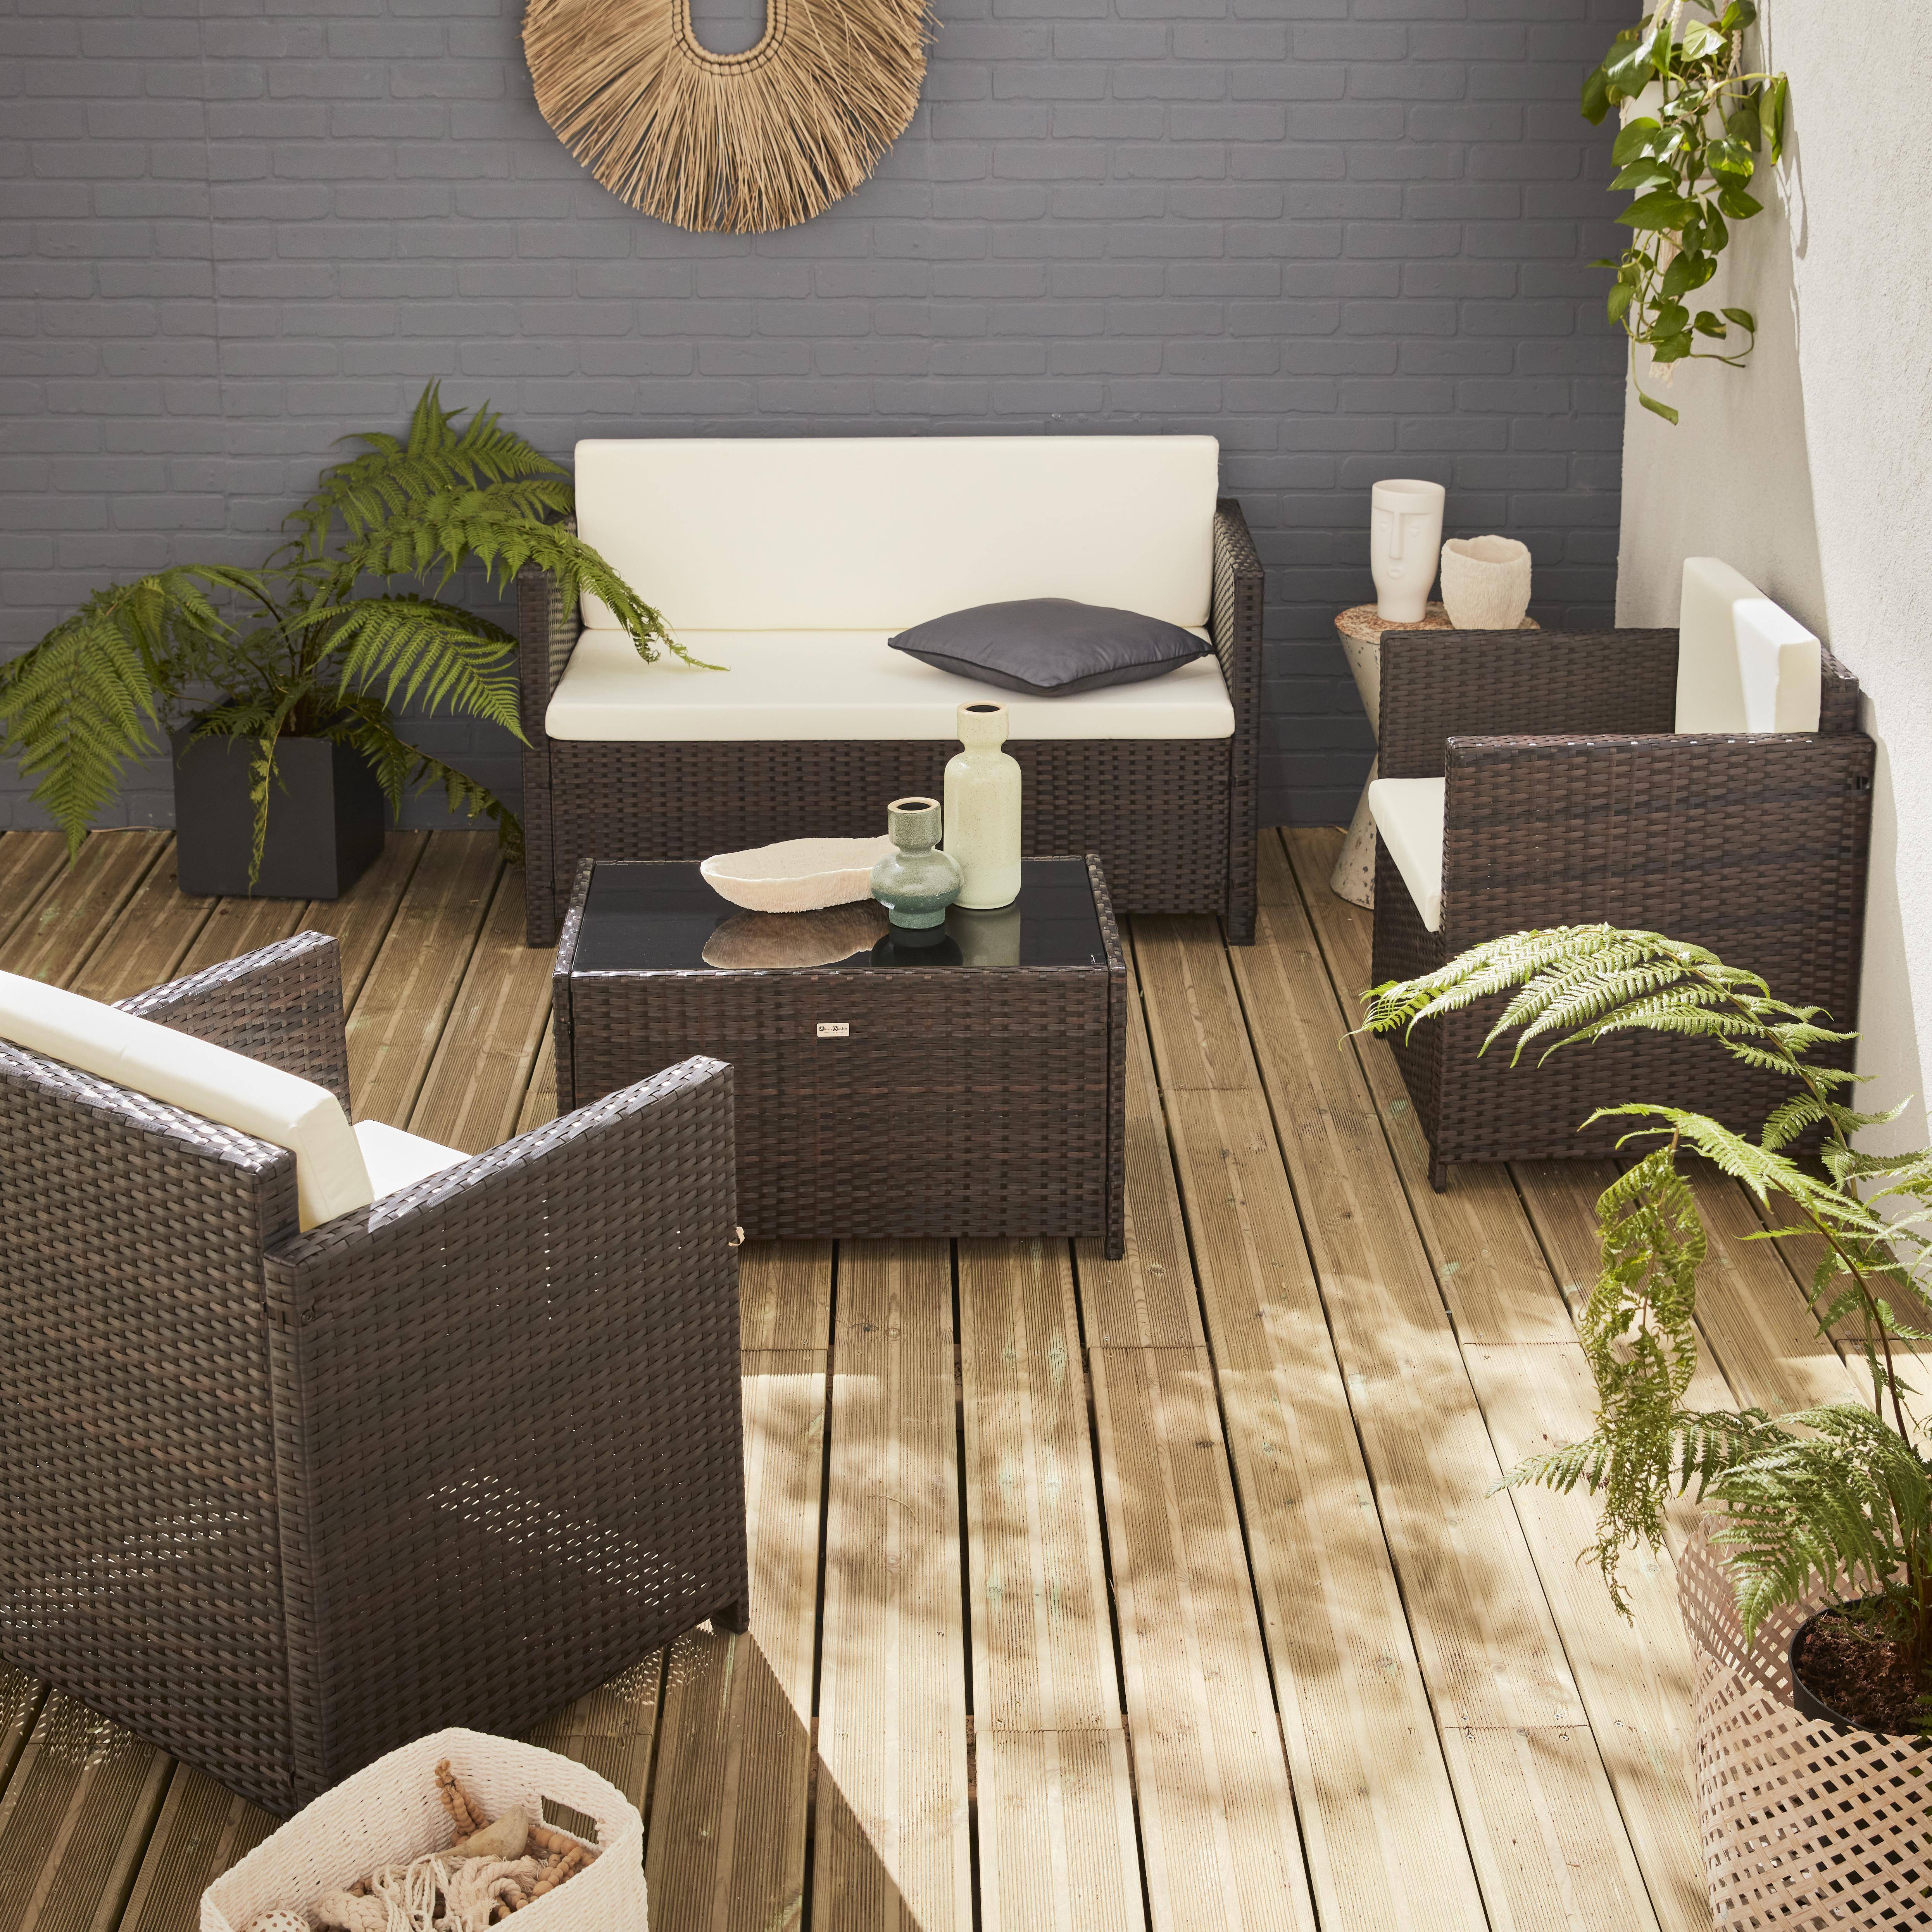 Muebles de jardín, conjunto sofá de exterior, Marrón crudo, 4 plazas, rattan sintético, resina trenzada - Perugia Photo1